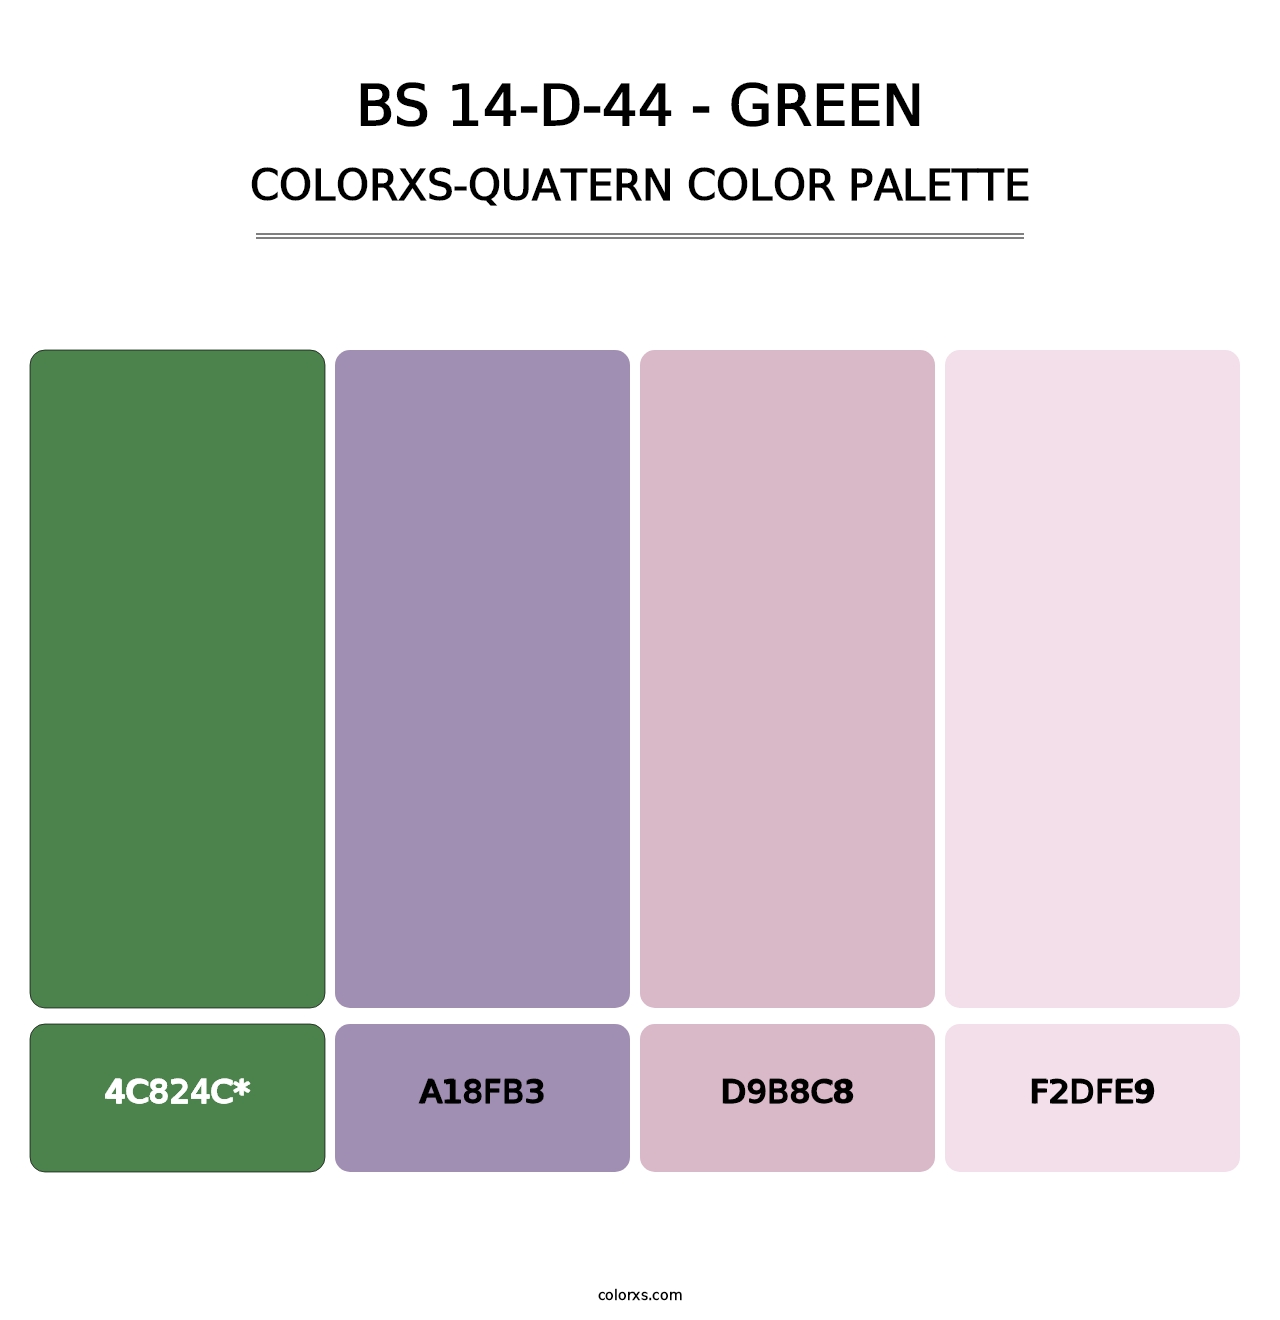 BS 14-D-44 - Green - Colorxs Quatern Palette